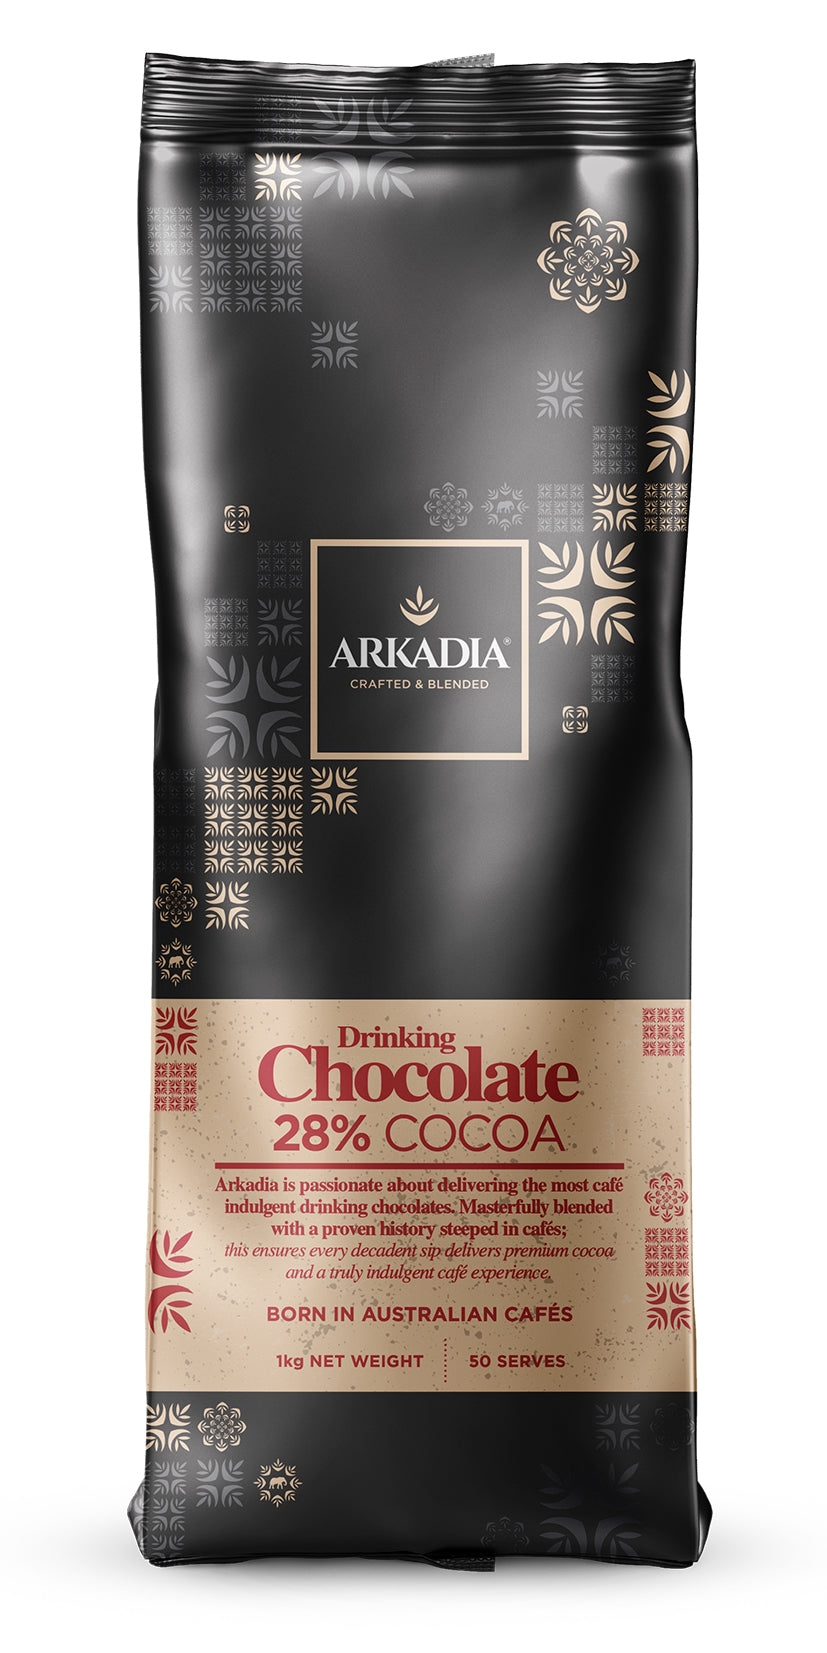 Drinking Chocolate 28% Cocoa